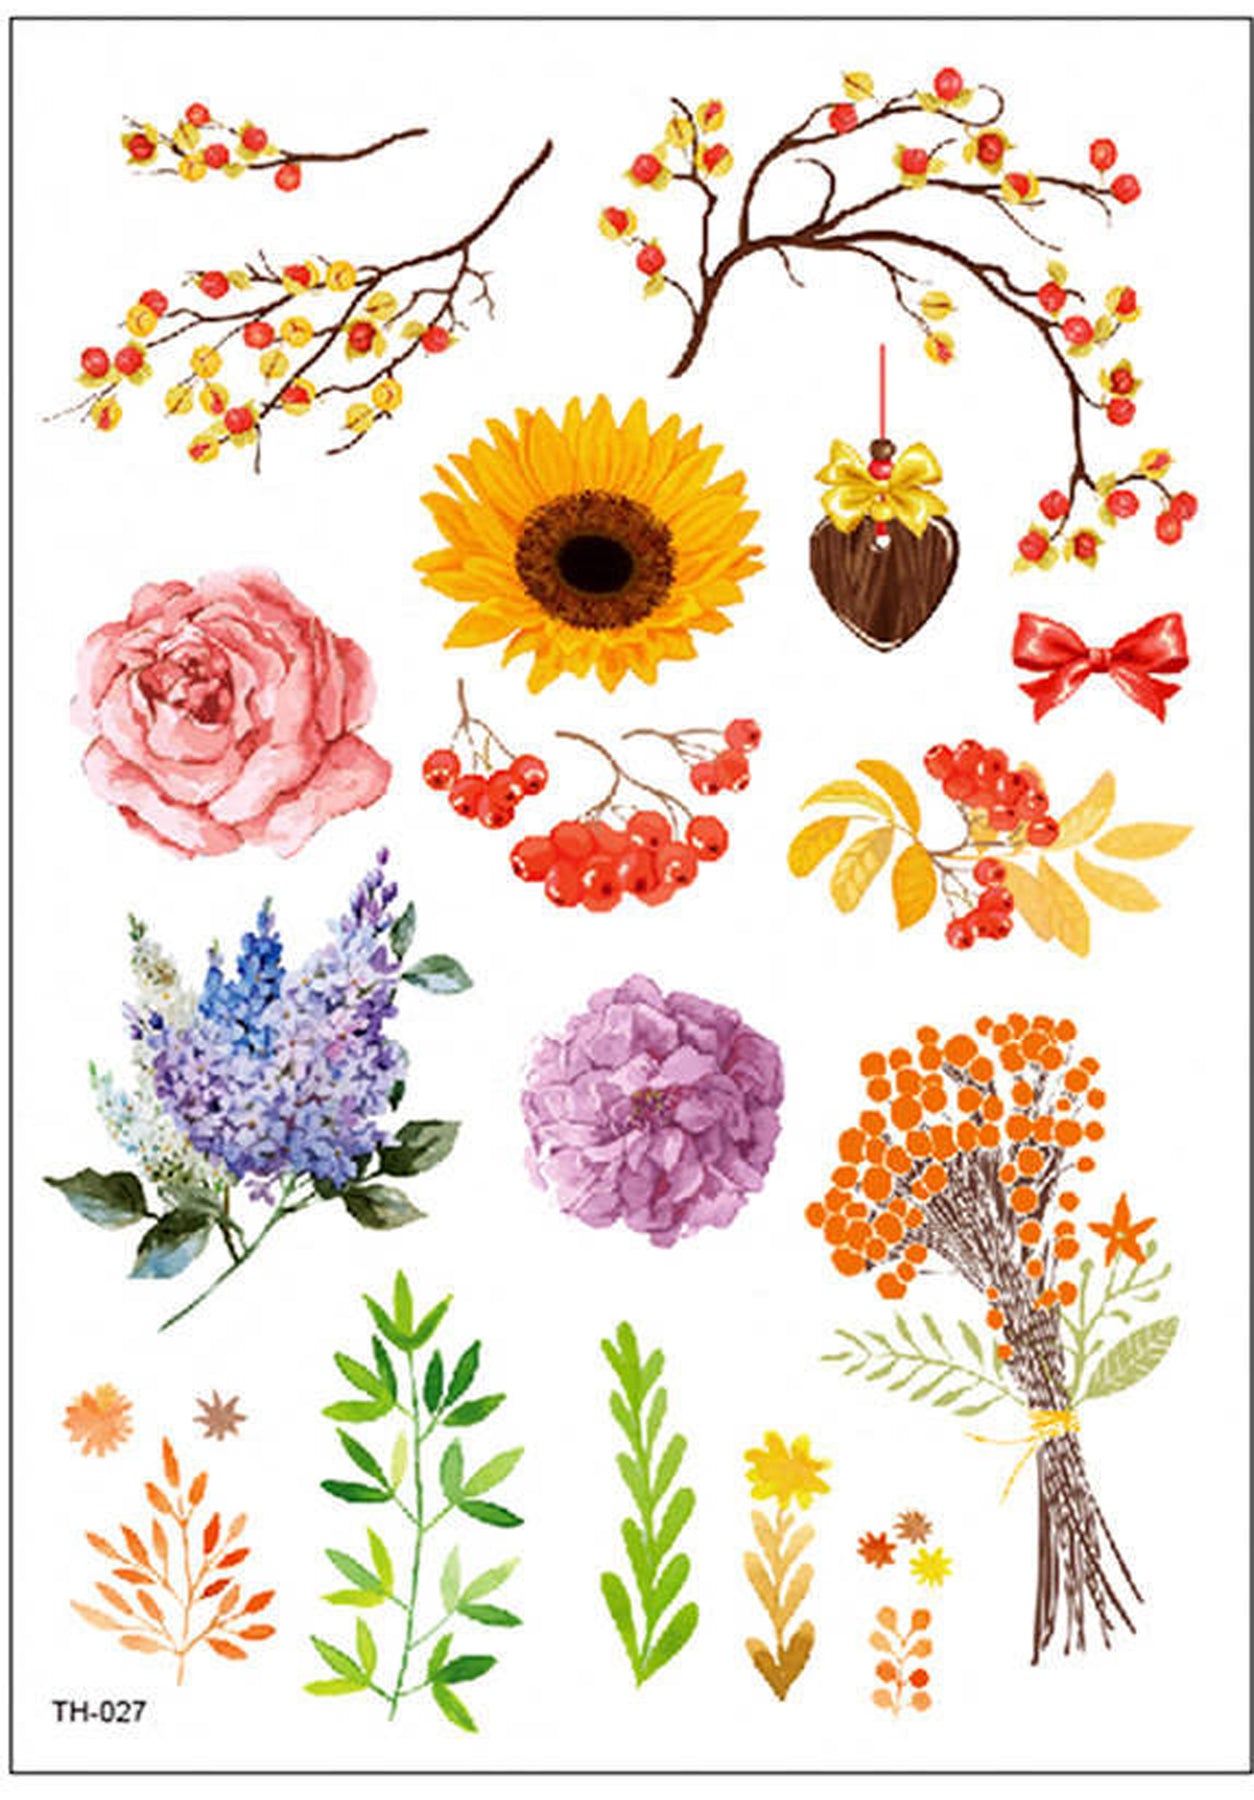 October Birth Flowers Cosmos 2 | Birth flower tattoos, Flower tattoo  meanings, Flower tattoo